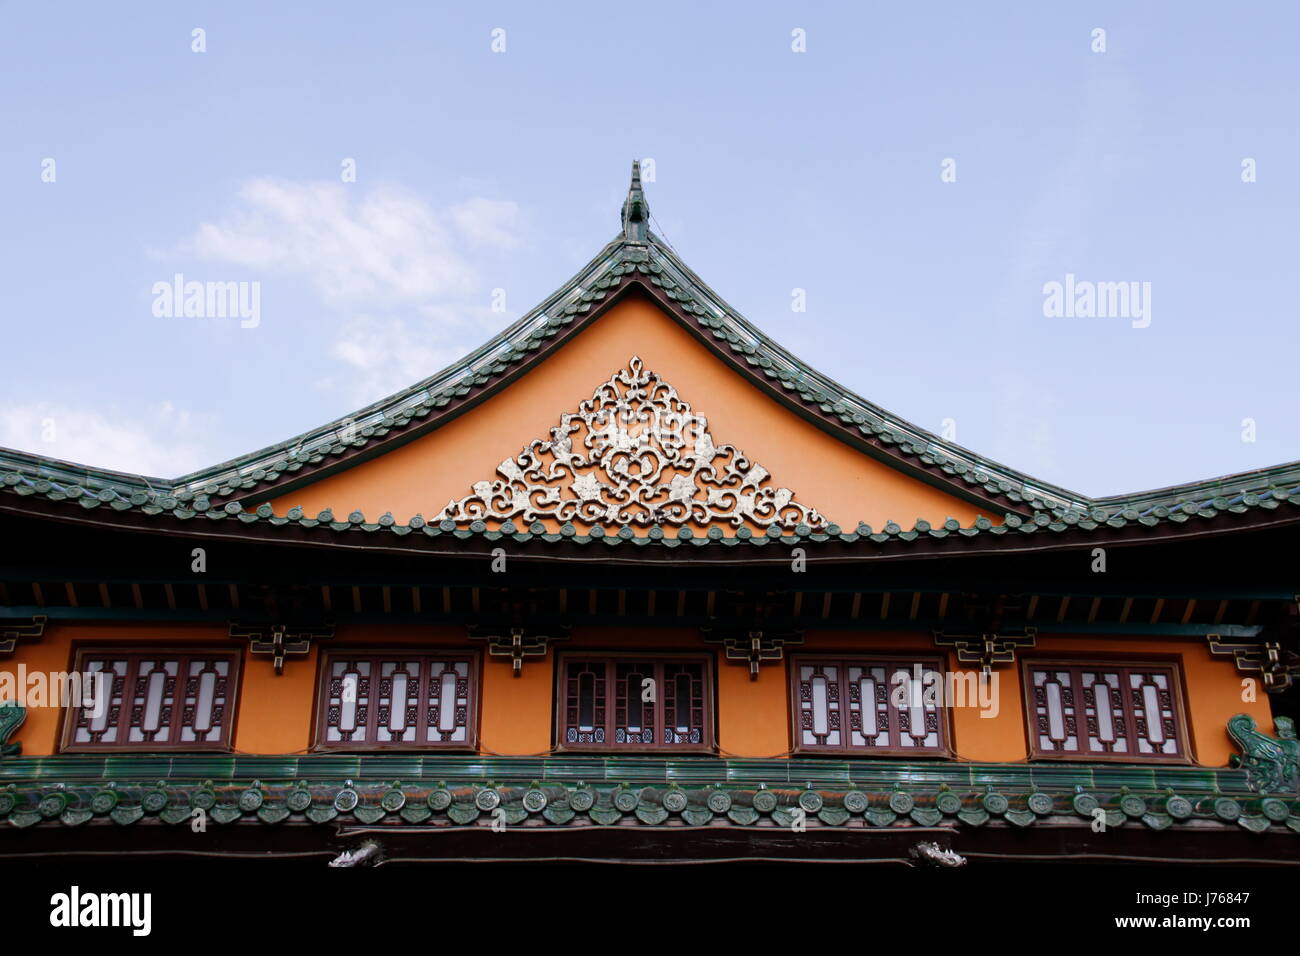 Tempel Pagode curvate chinesischen Dach China Makro Nahaufnahme Makro Aufnahme Stockfoto